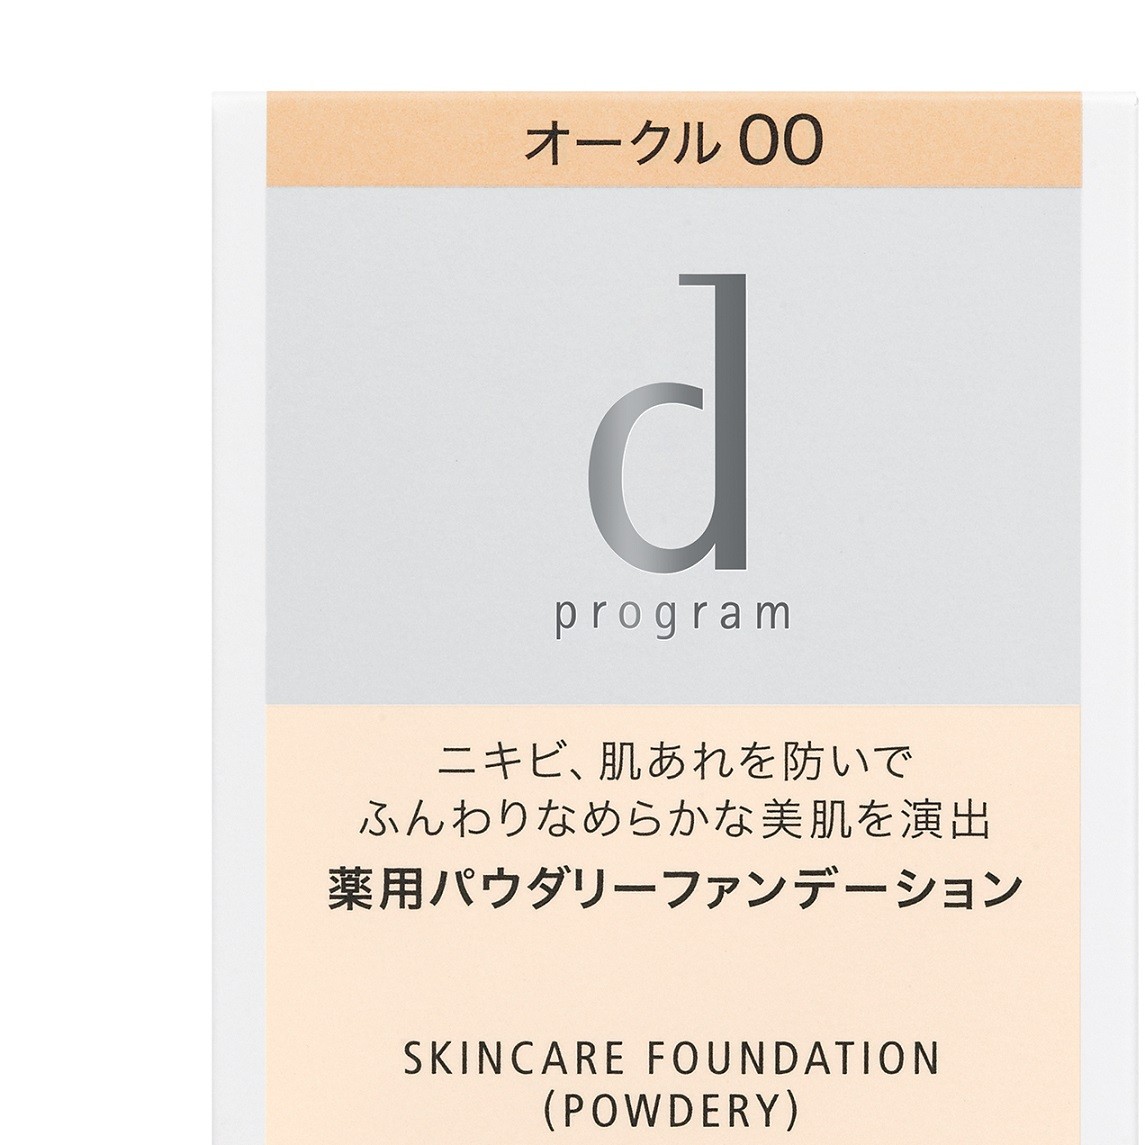 * Shiseido одобрено магазин лекарство для уход за кожей основа ( powder Lee ) дуб ru00(re Phil ) бесплатная доставка. takkyubin (доставка на дом) такой же и т.п. доставка время 